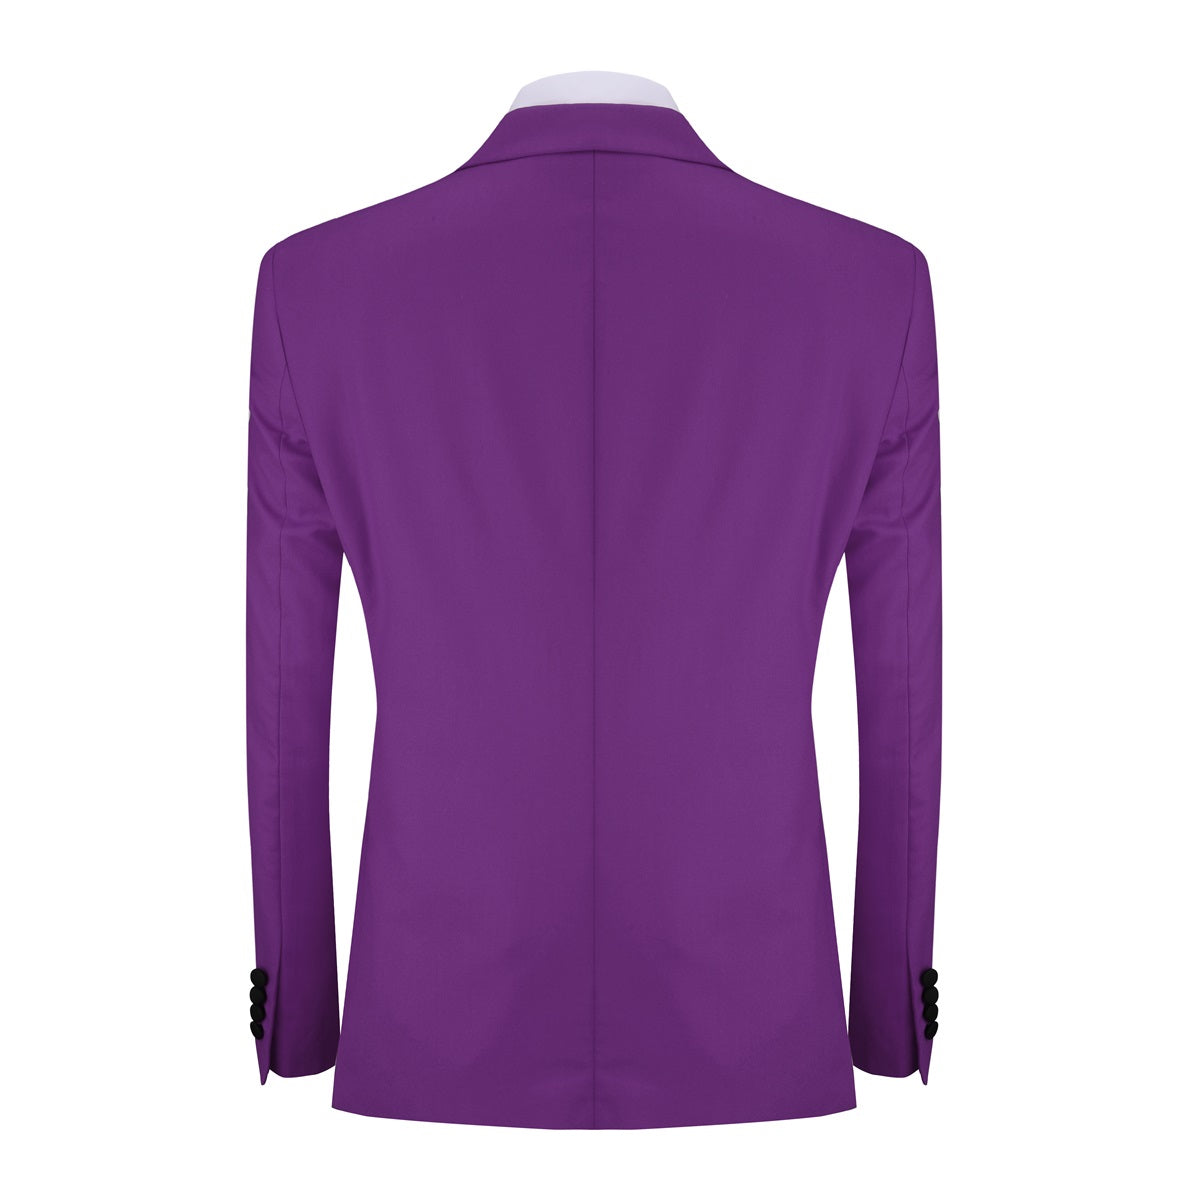 Purple 3-Piece Slim Fit Tuxedo - One Button, Peaked Lapel